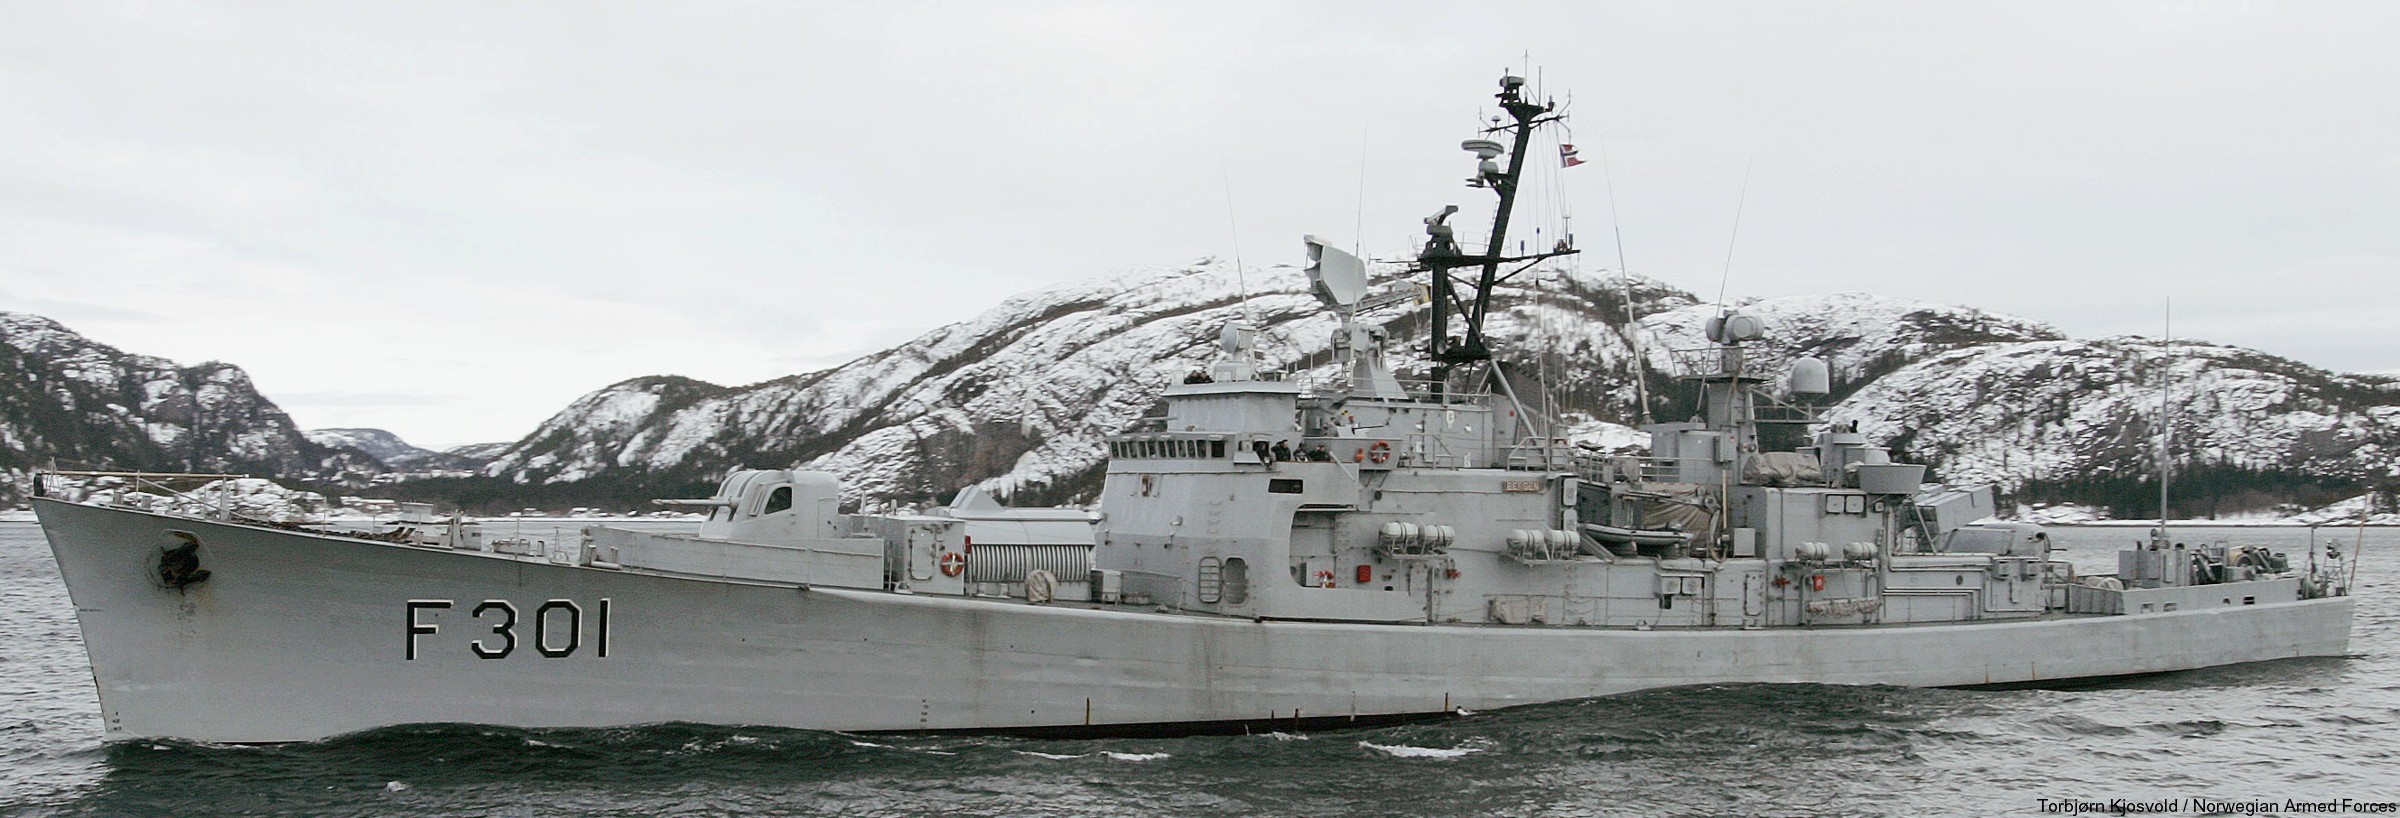 f-301 hnoms bergen knm oslo class frigate royal norwegian navy sjoforsvaret 03